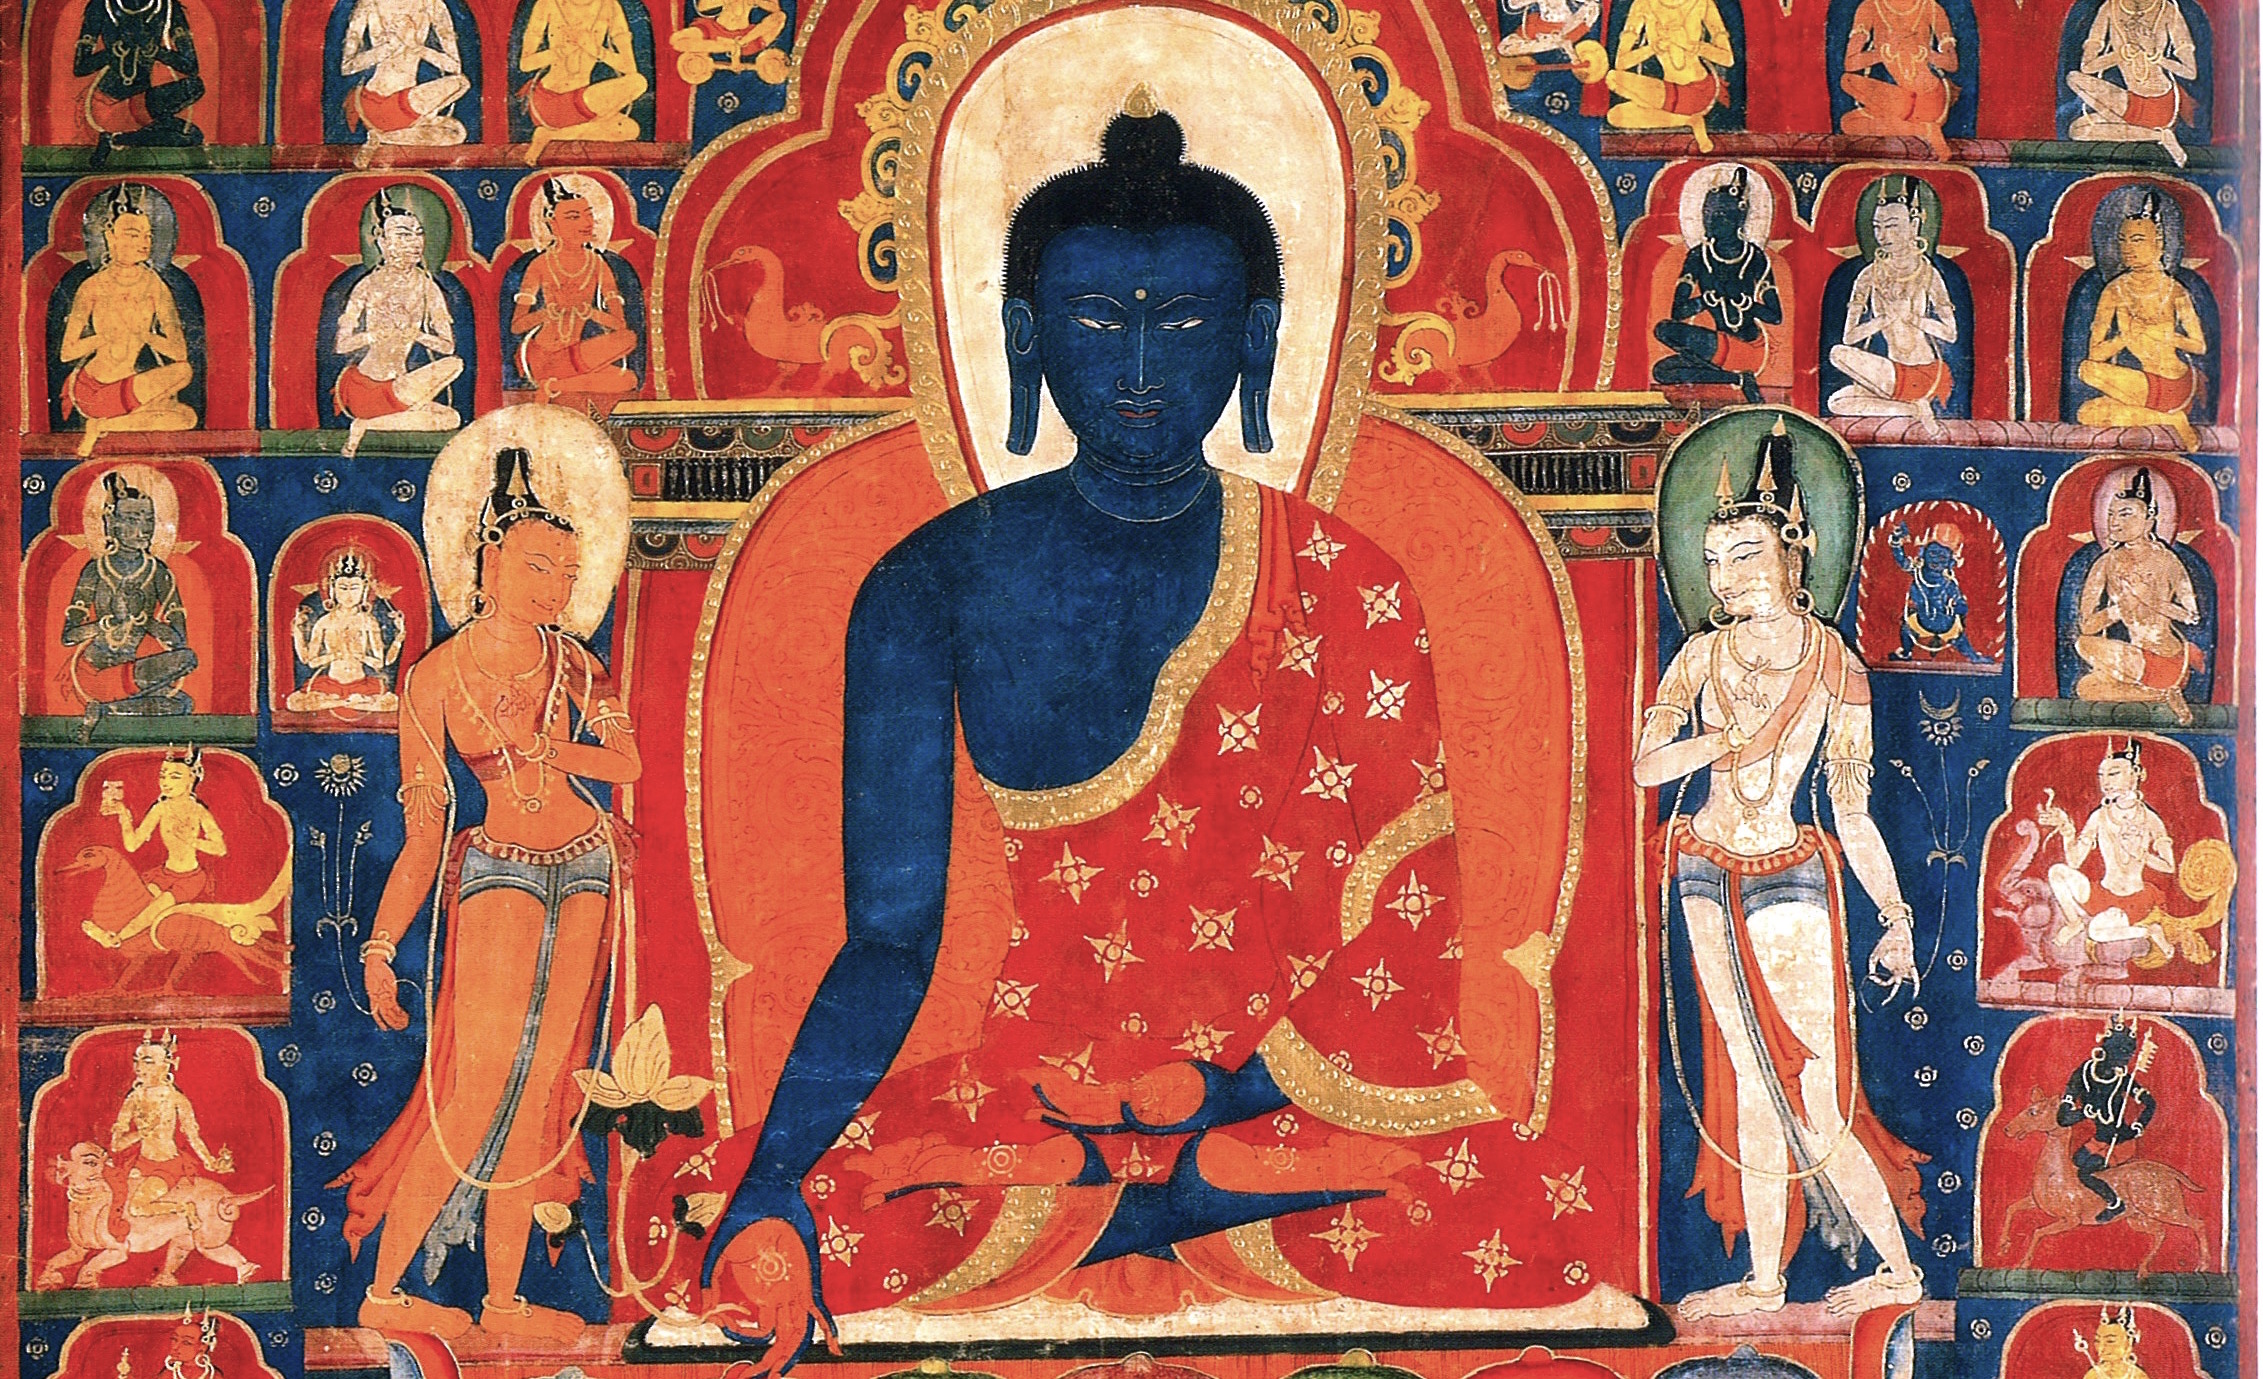 Tibetan Painted Banner of the Medicine Buddha